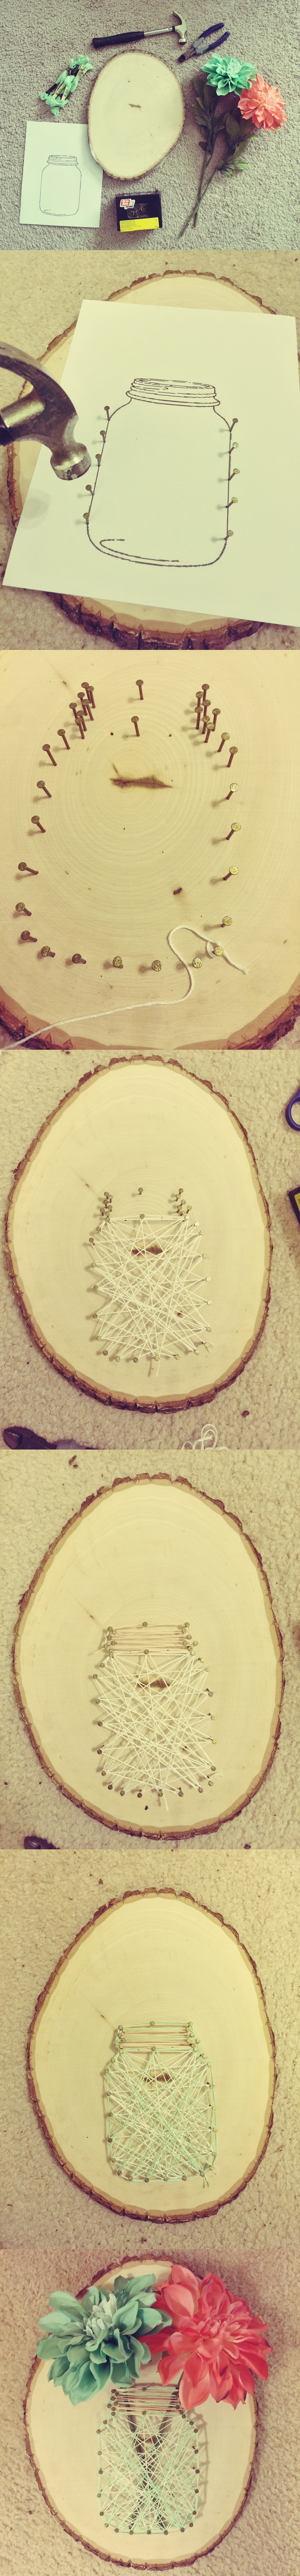 DIY Mason Jar String Art